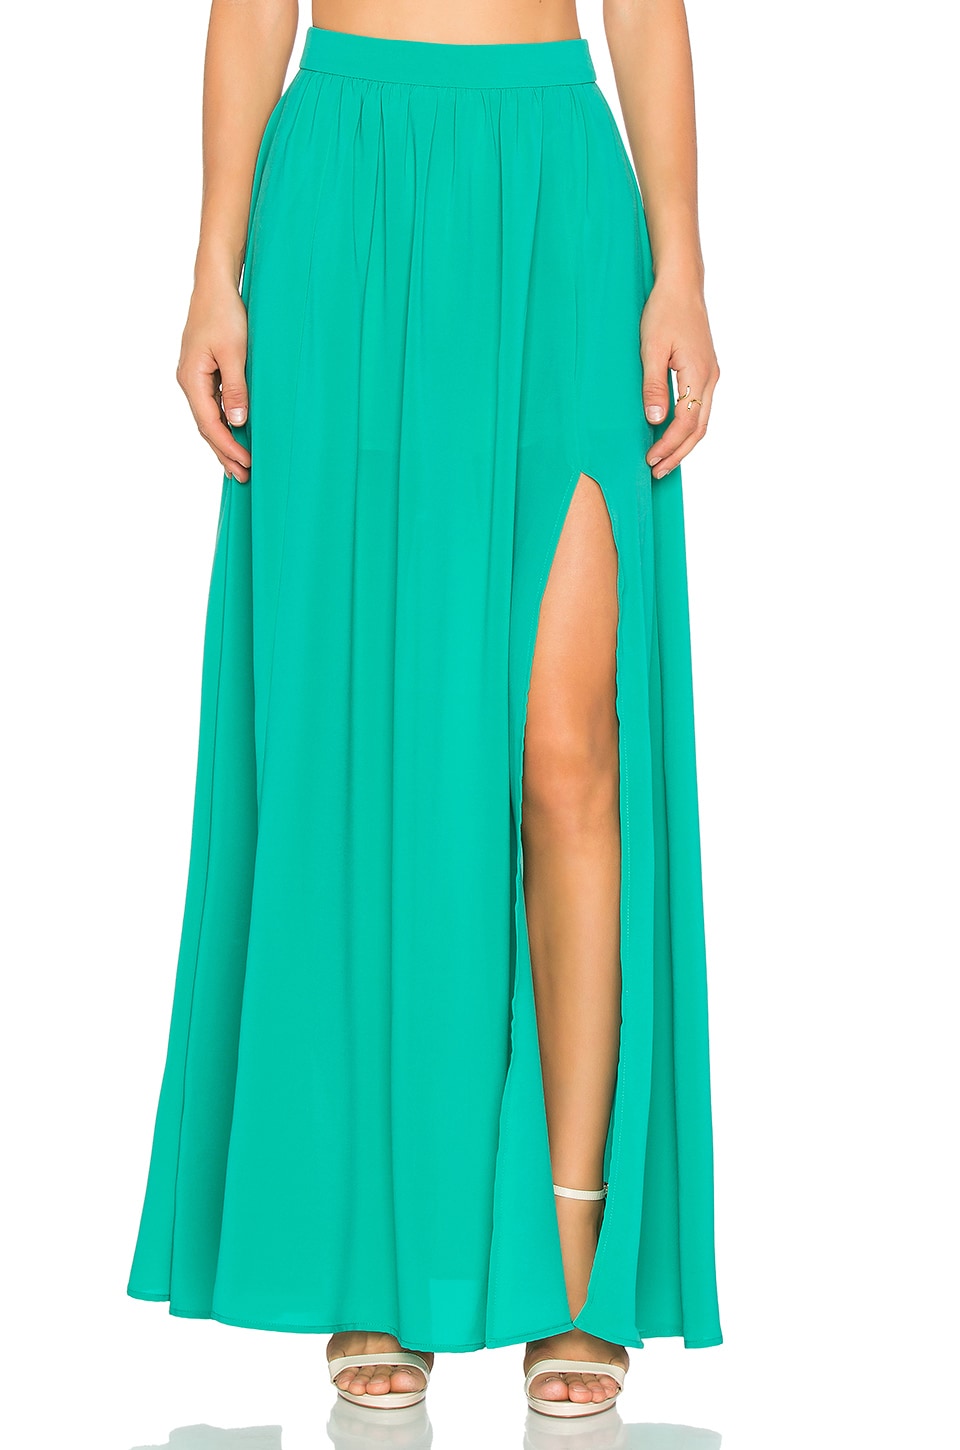 BLAQUE LABEL x REVOLVE Maxi Skirt in Emerald | REVOLVE